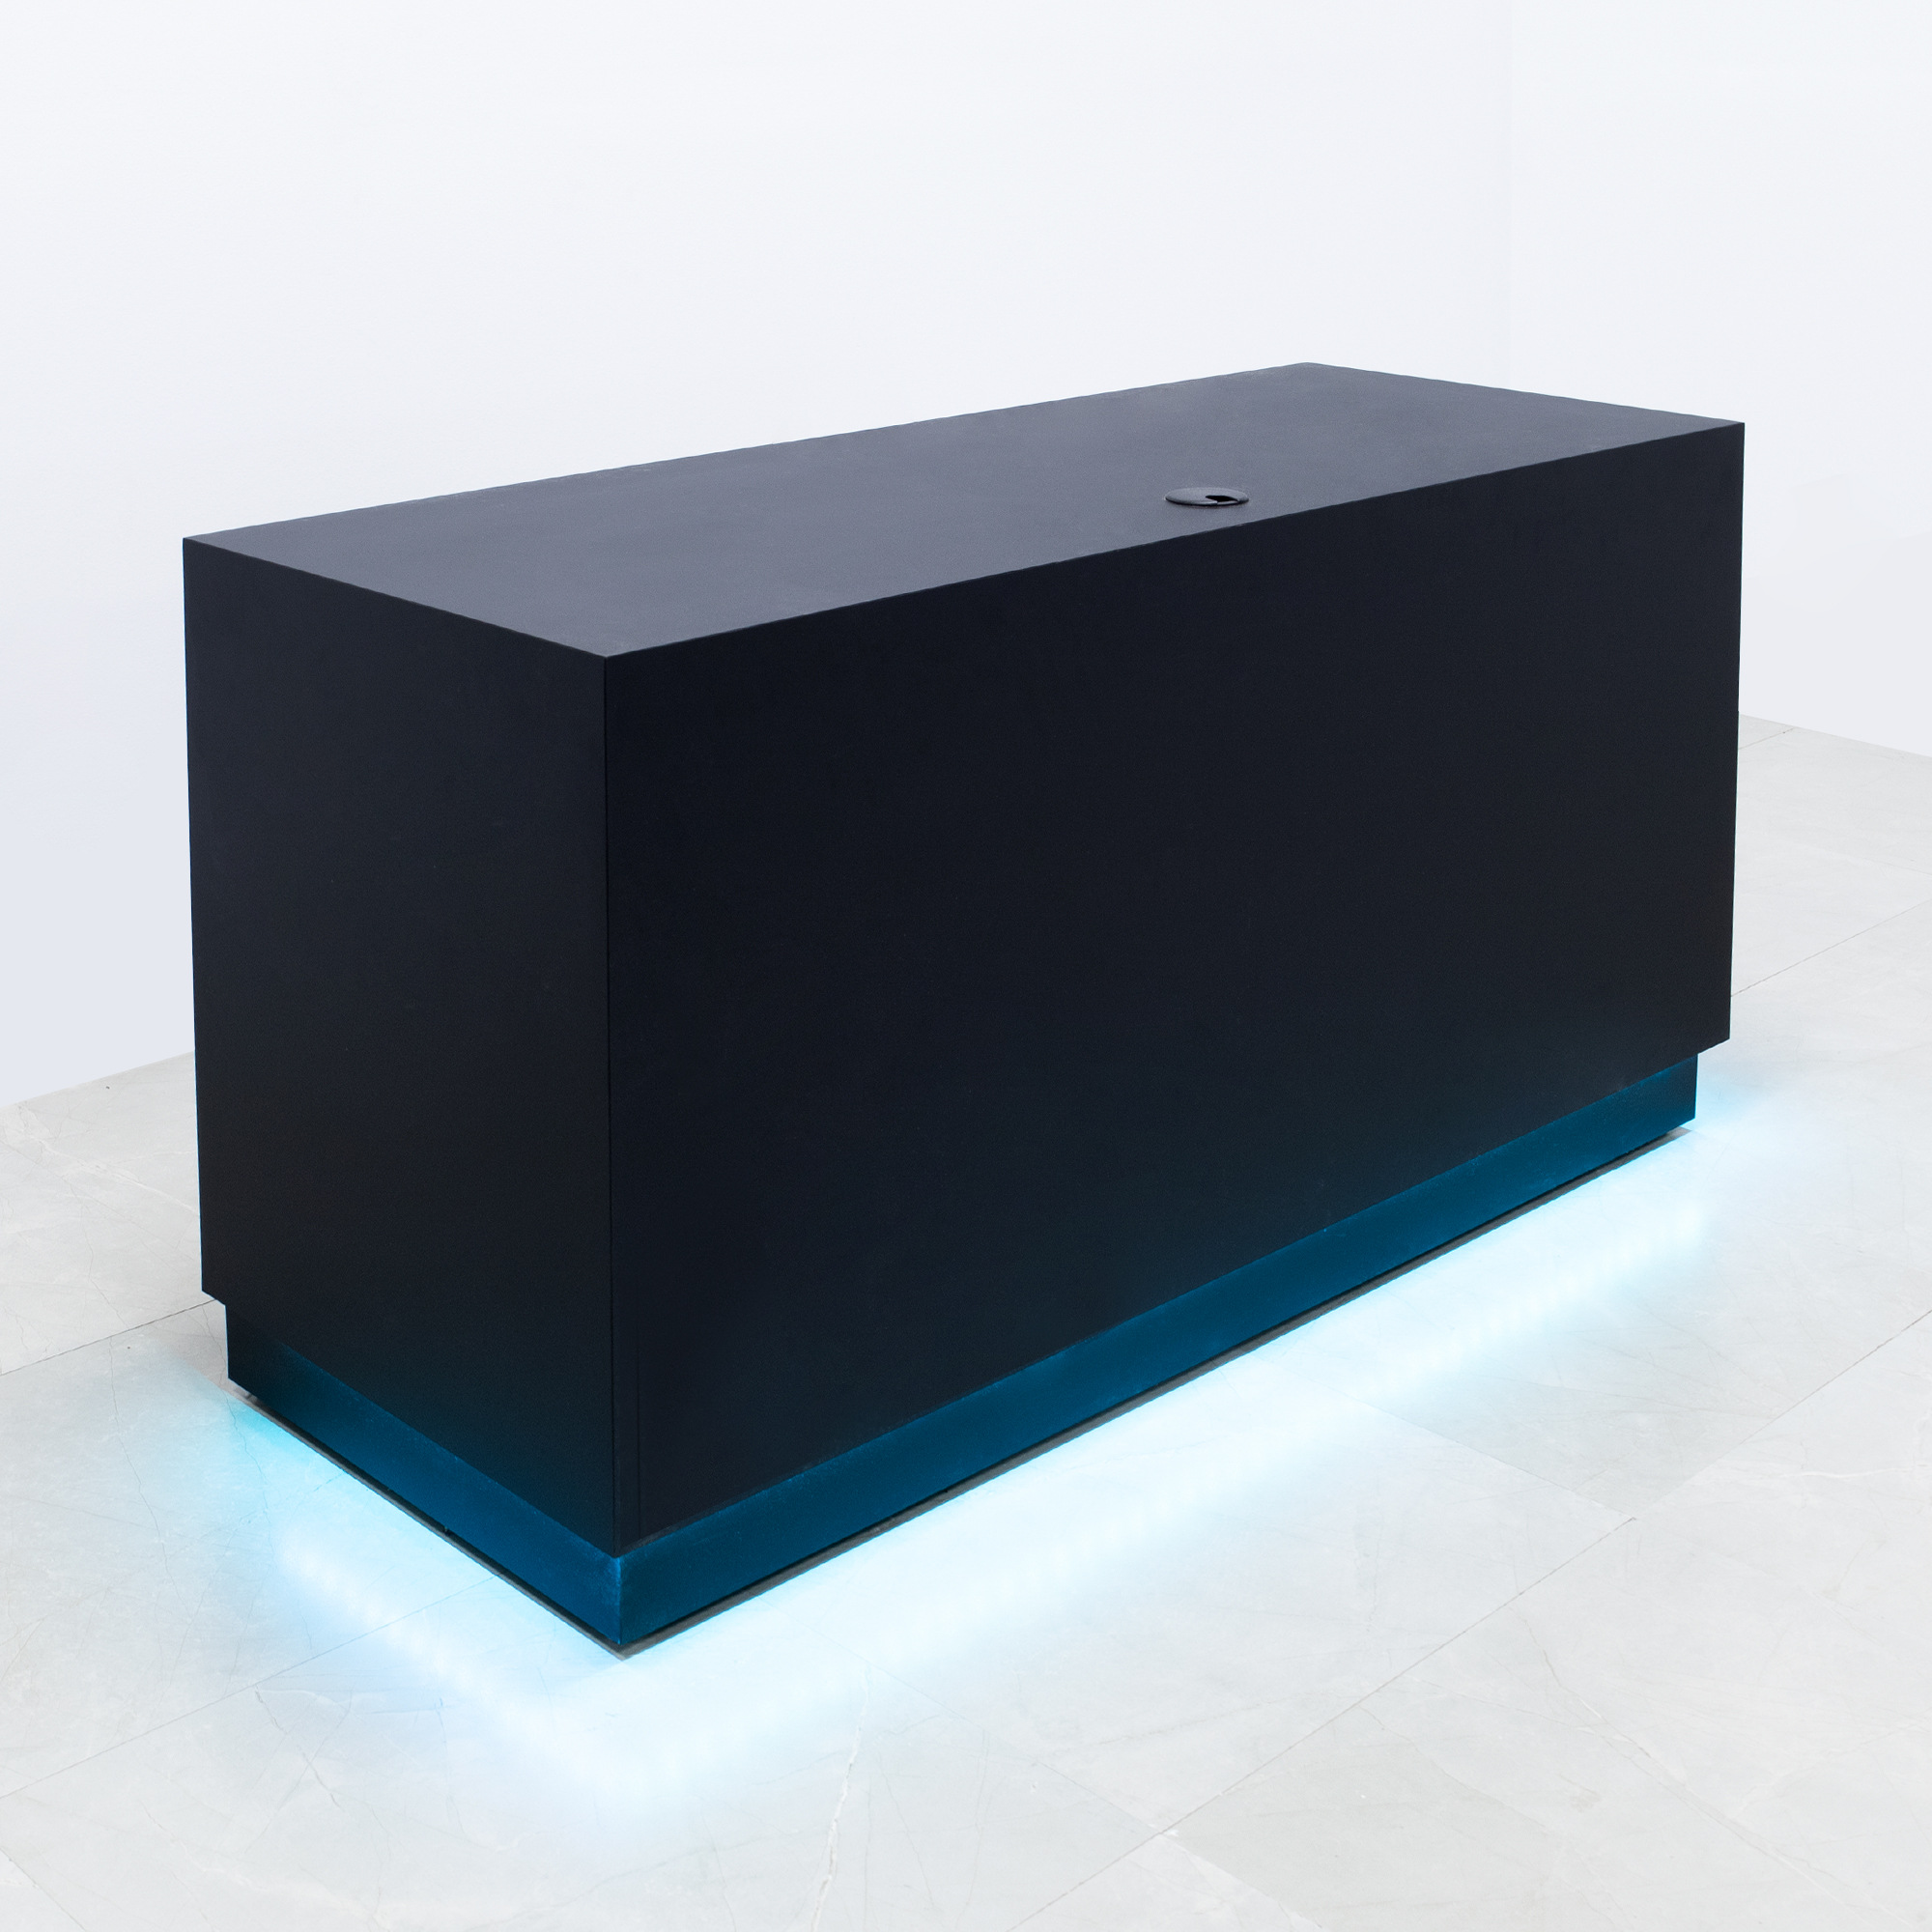 60-inch Houston Custom Reception Desk in black traceless laminate main desk and toe-kick, with white LED, shown here.